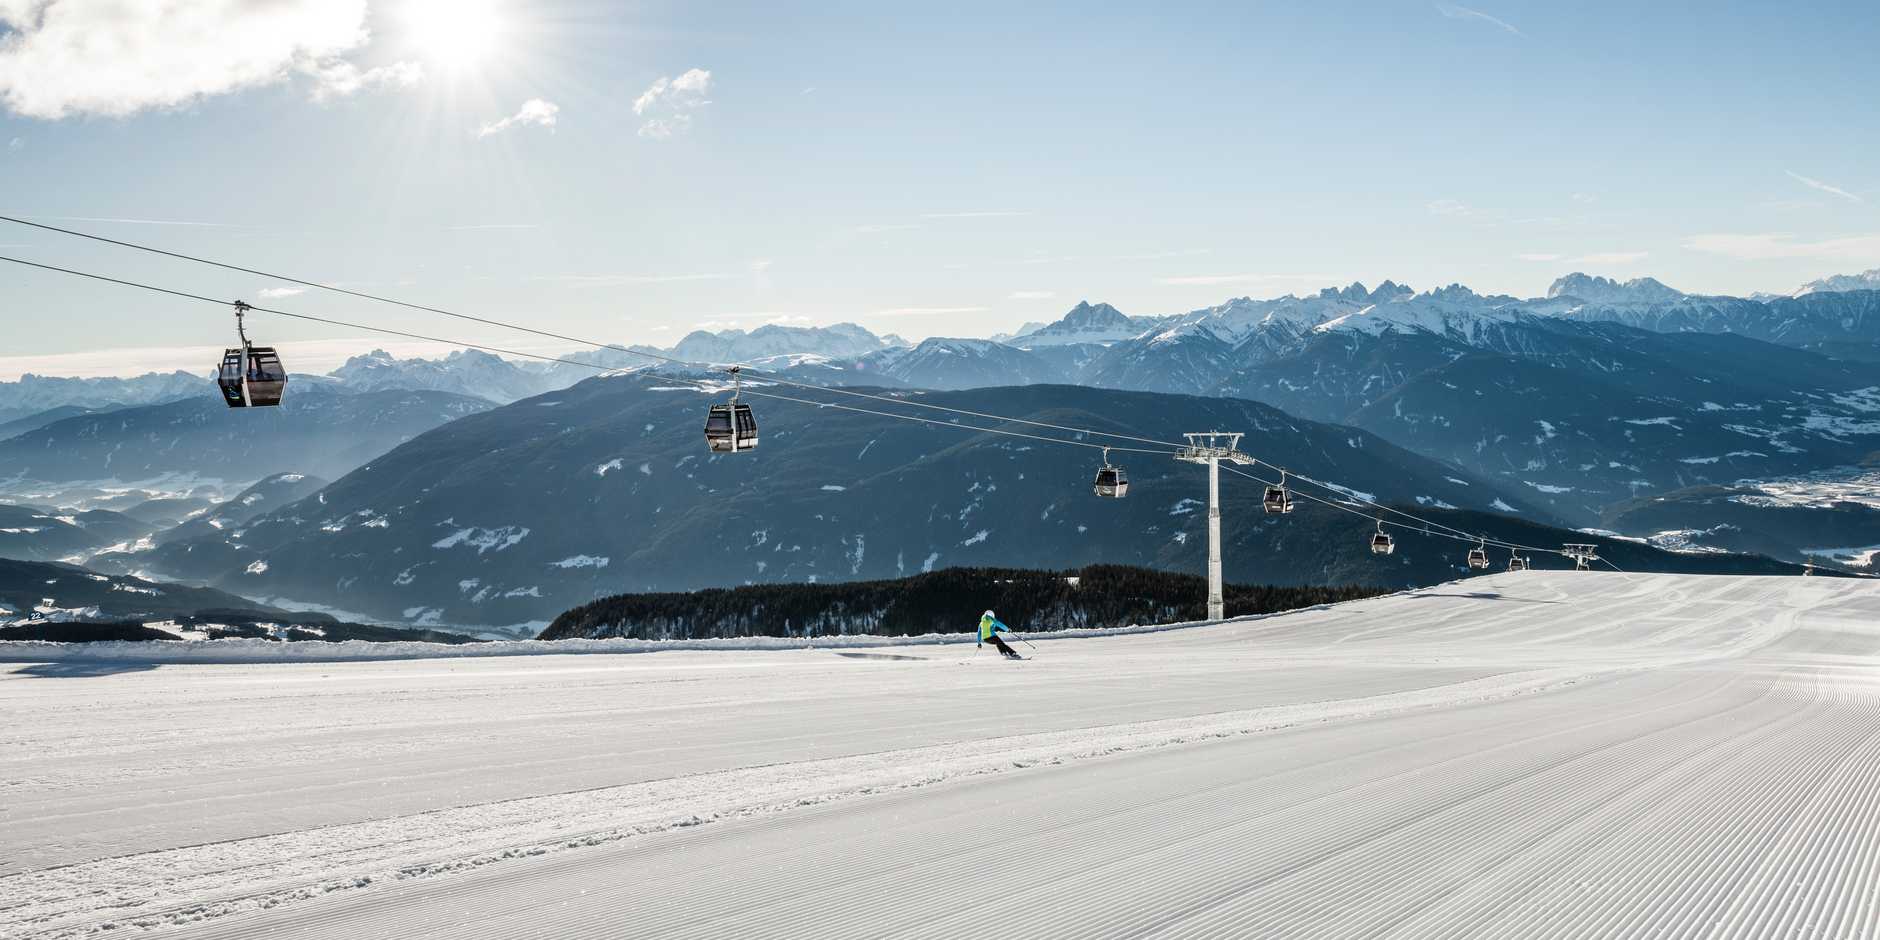 Gitschberg Jochtal skiing resort